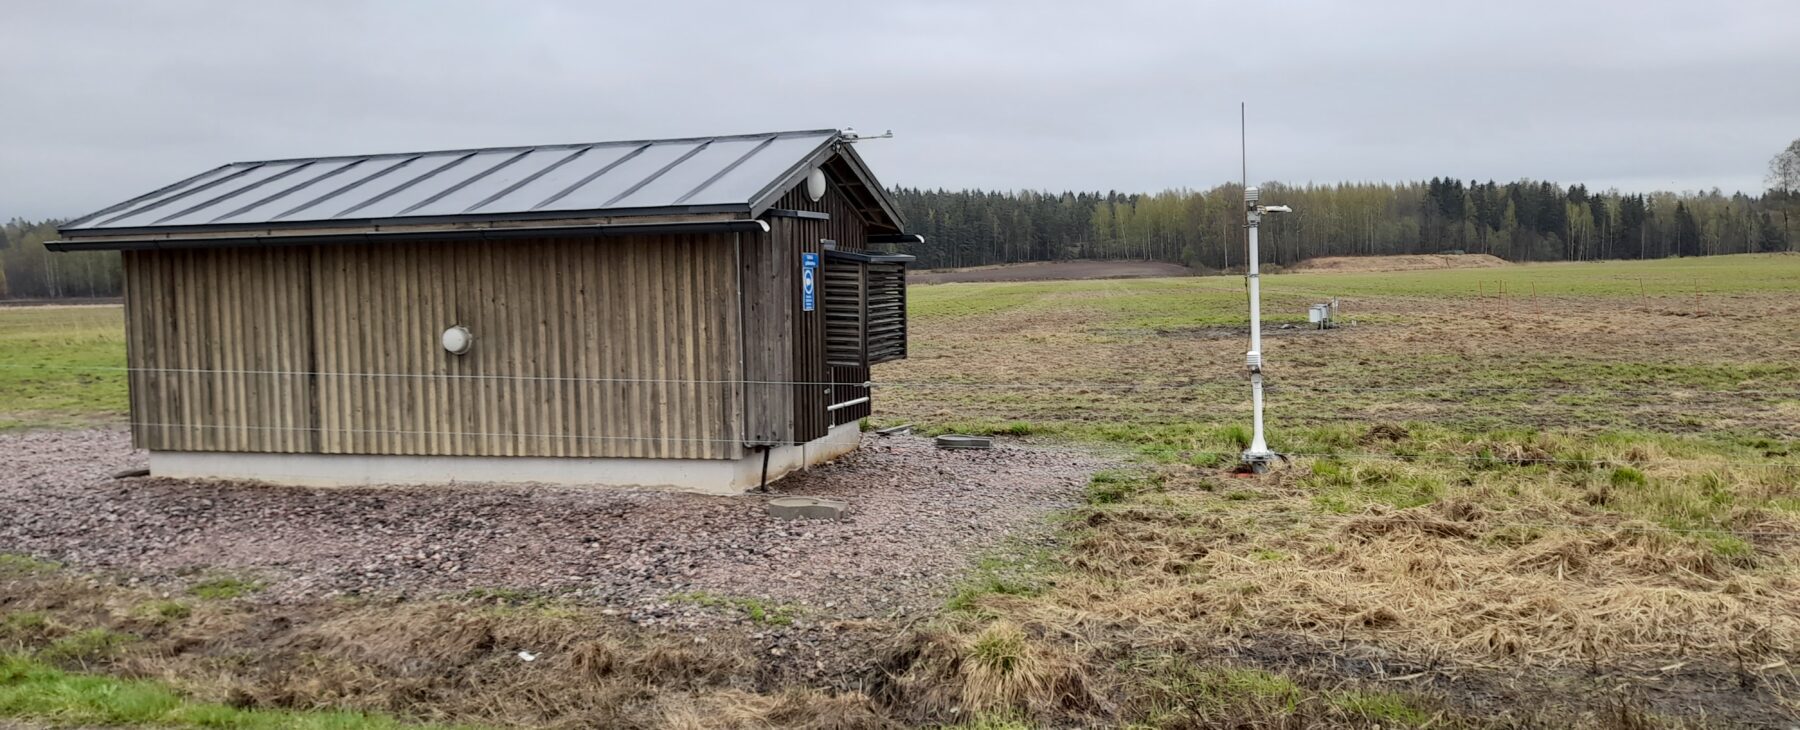 SMEAR-Agri measuring station.